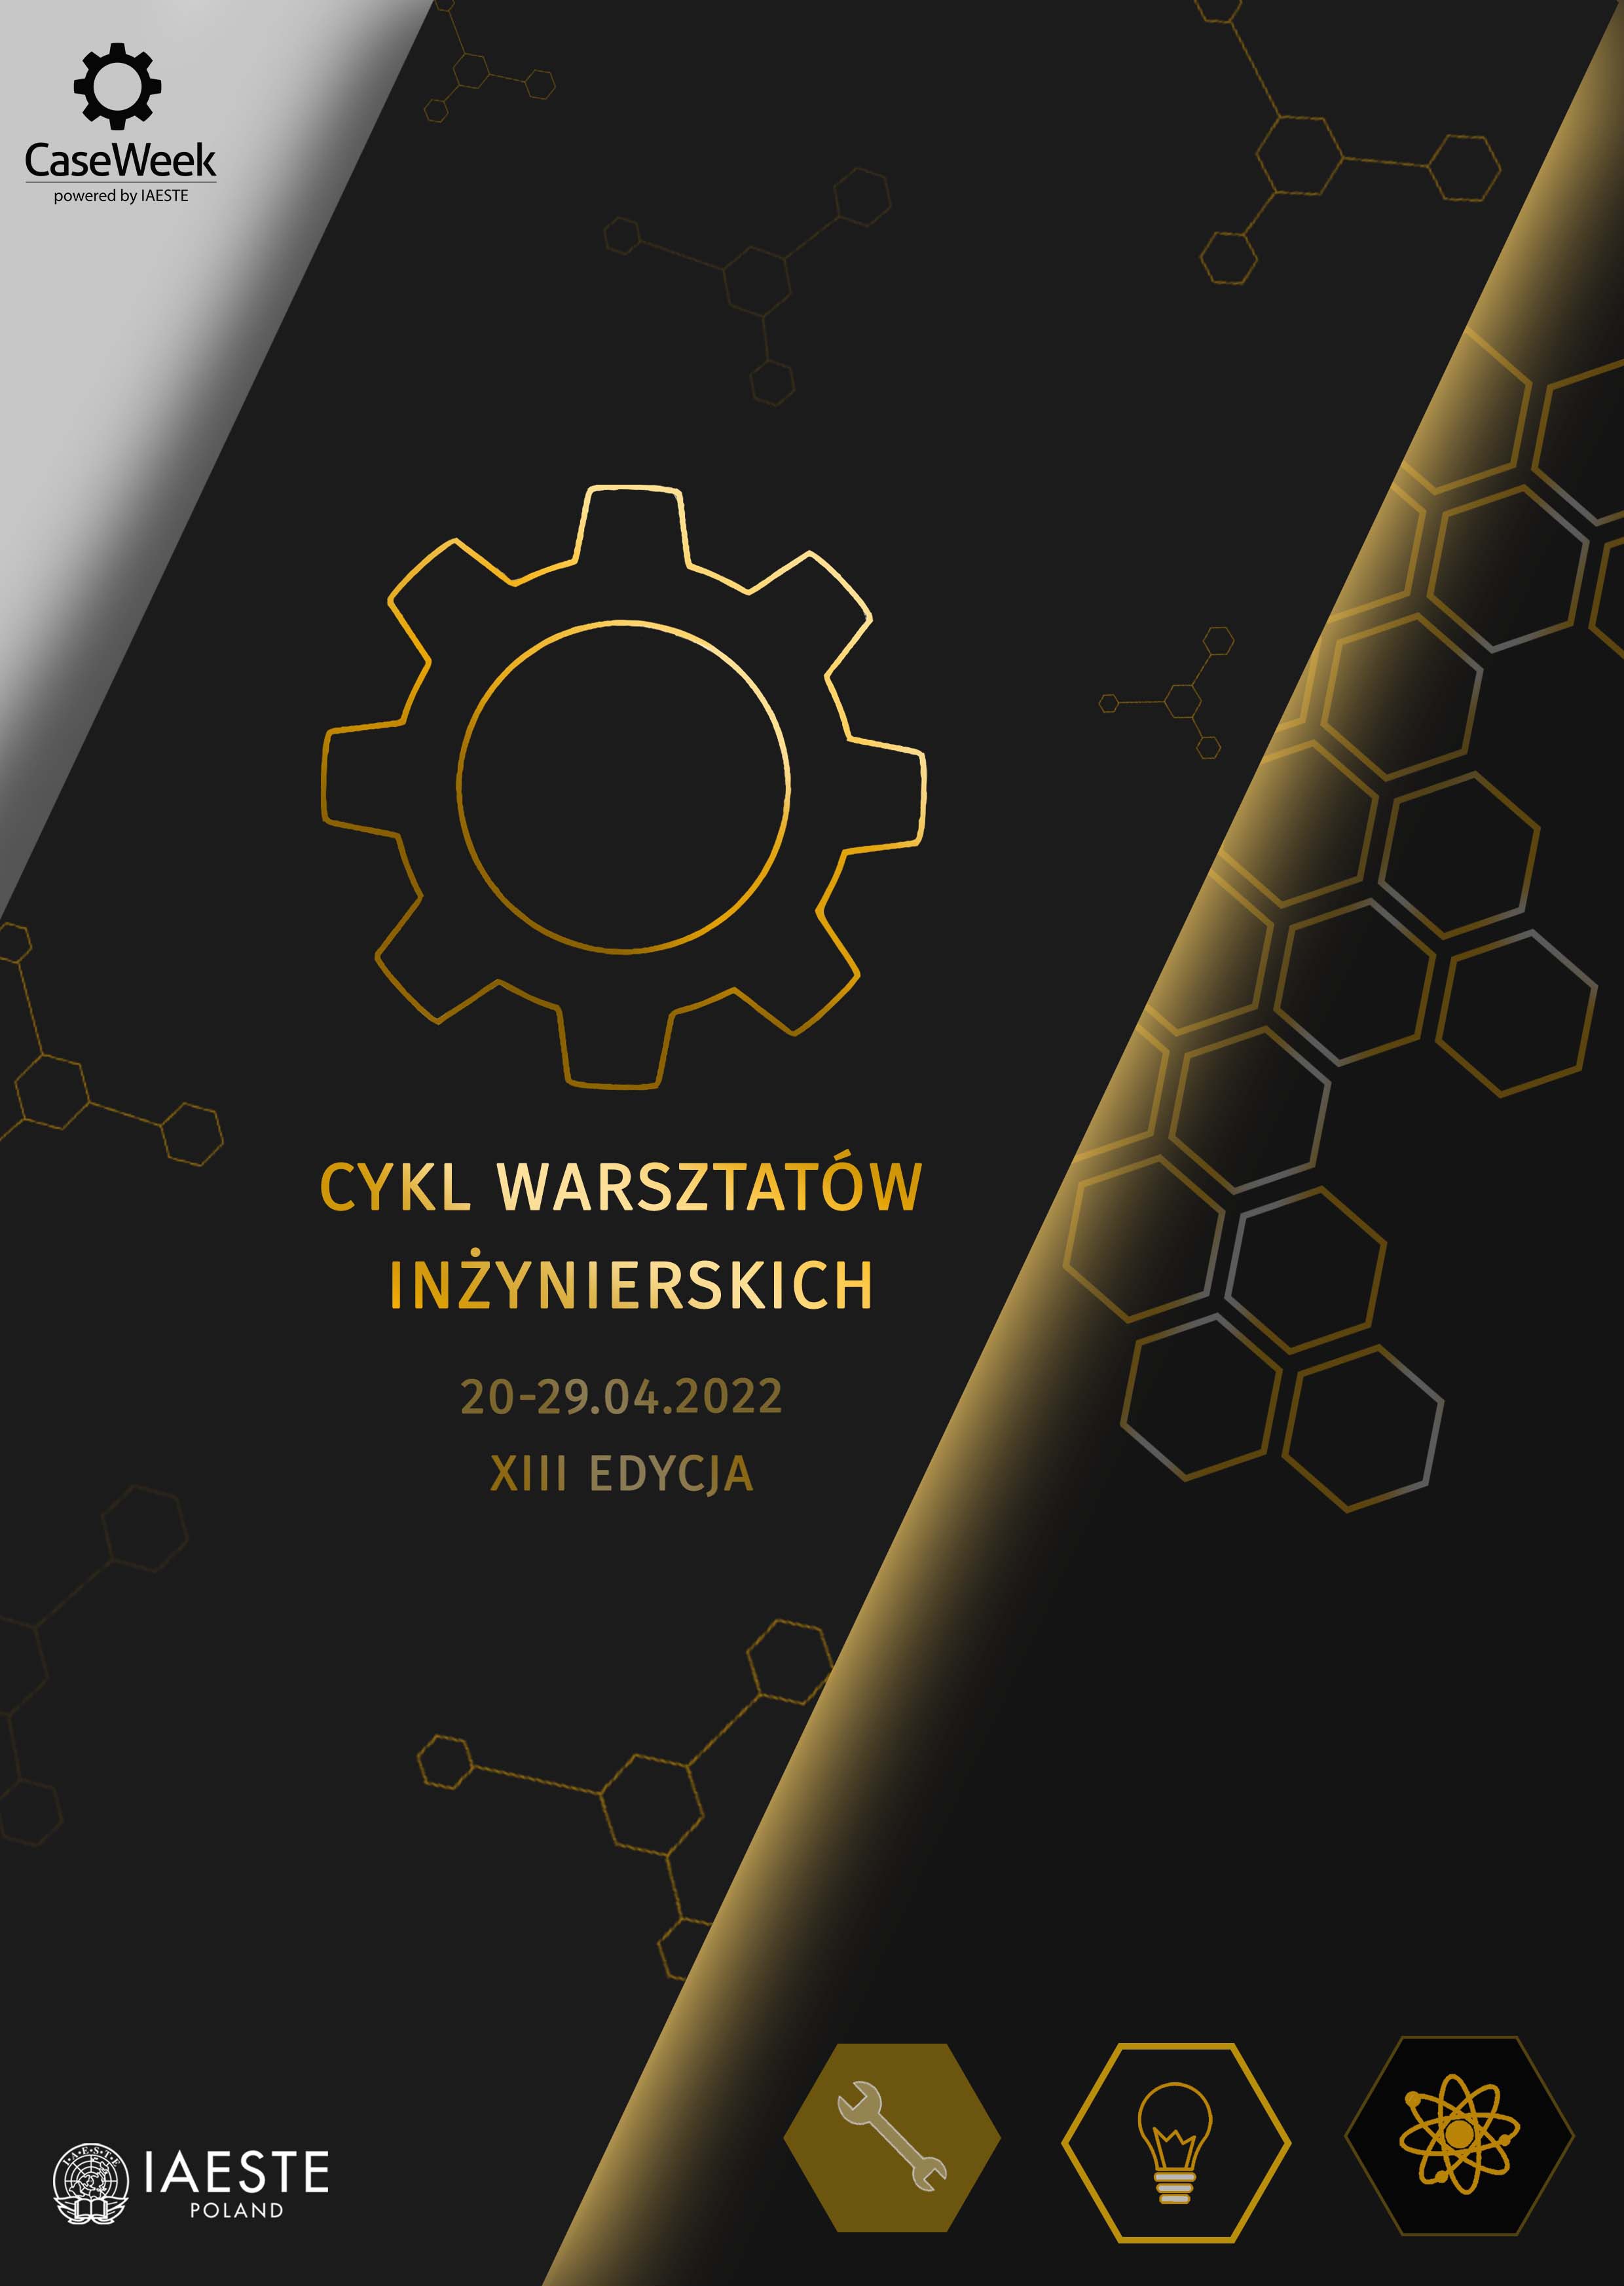 CaseWeek 2022 Politechnika Wrocławska